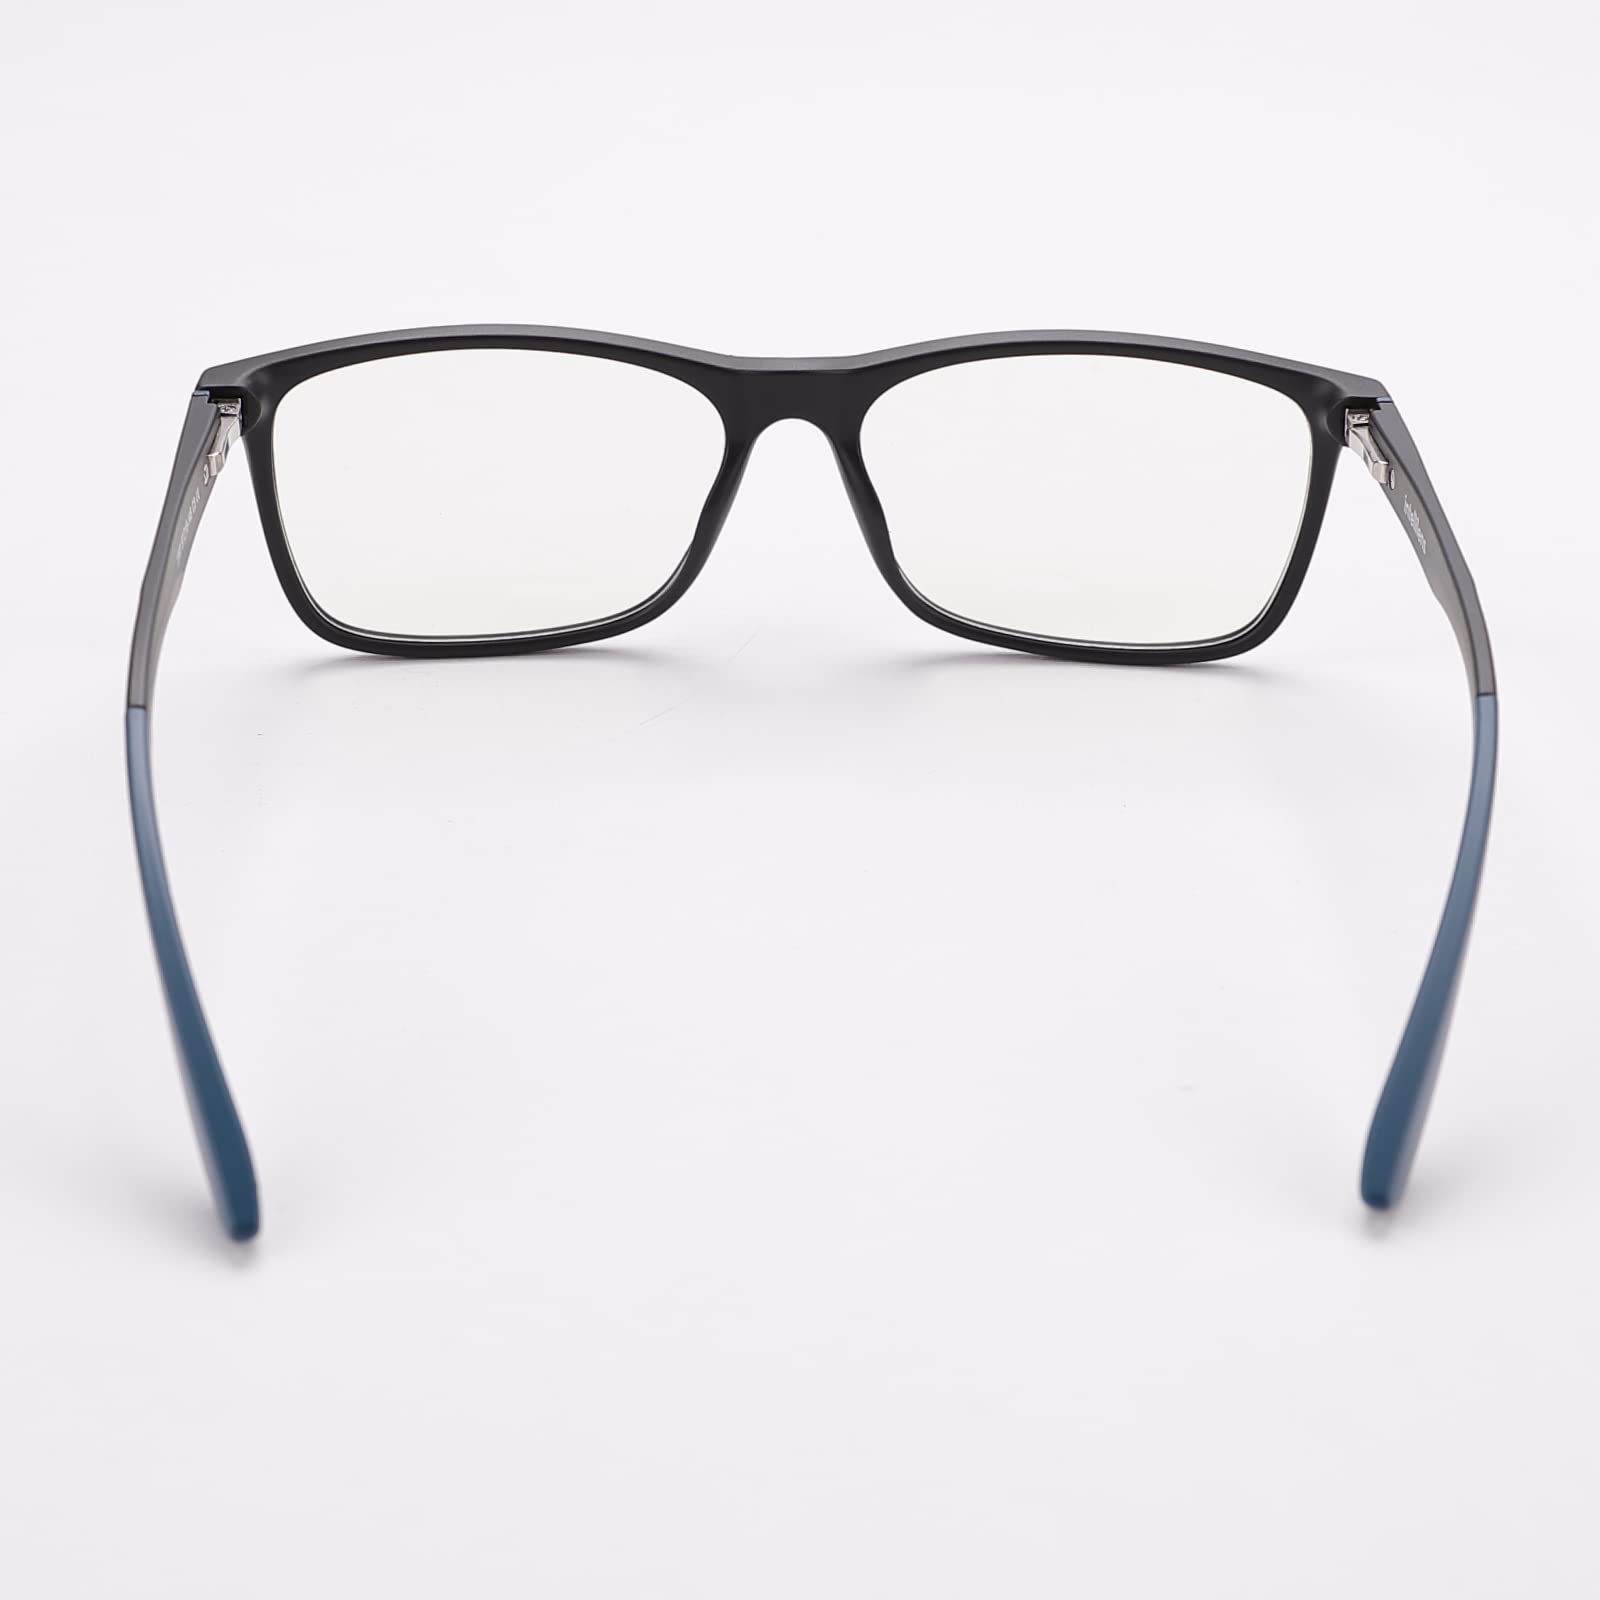 Intellilens Square Blue Cut Computer Glasses for Eye Protection | Zero Power, Anti Glare & Blue Light Filter Glasses | UV Protection Eye Glass for Men & Women (Black & Blue) (54-17-135)